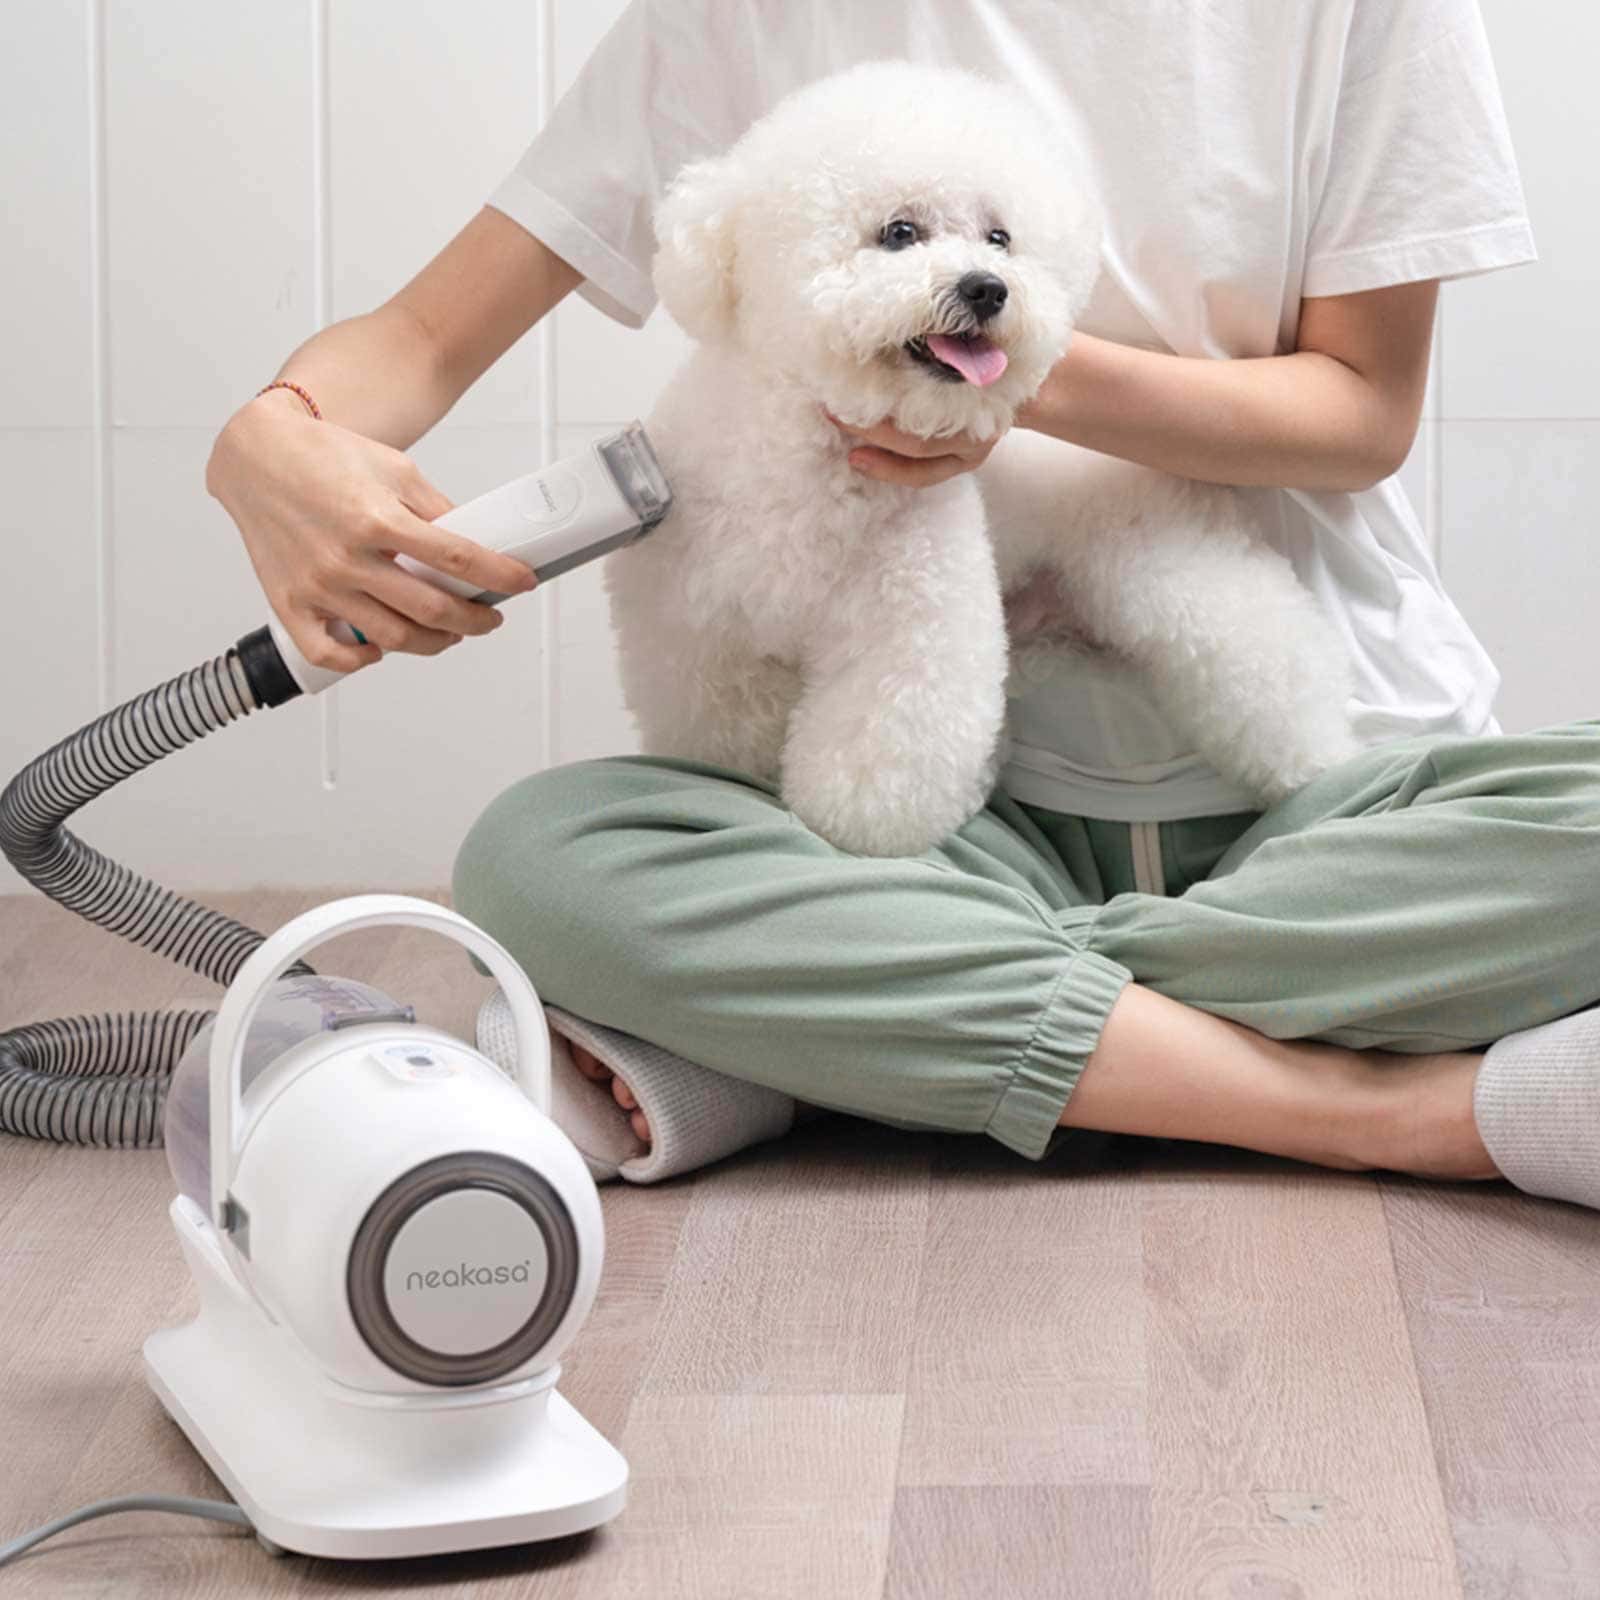 Neakasa P1 Pro Dog Grooming Kit for Dogs Cats | Pet Hair Vacuum